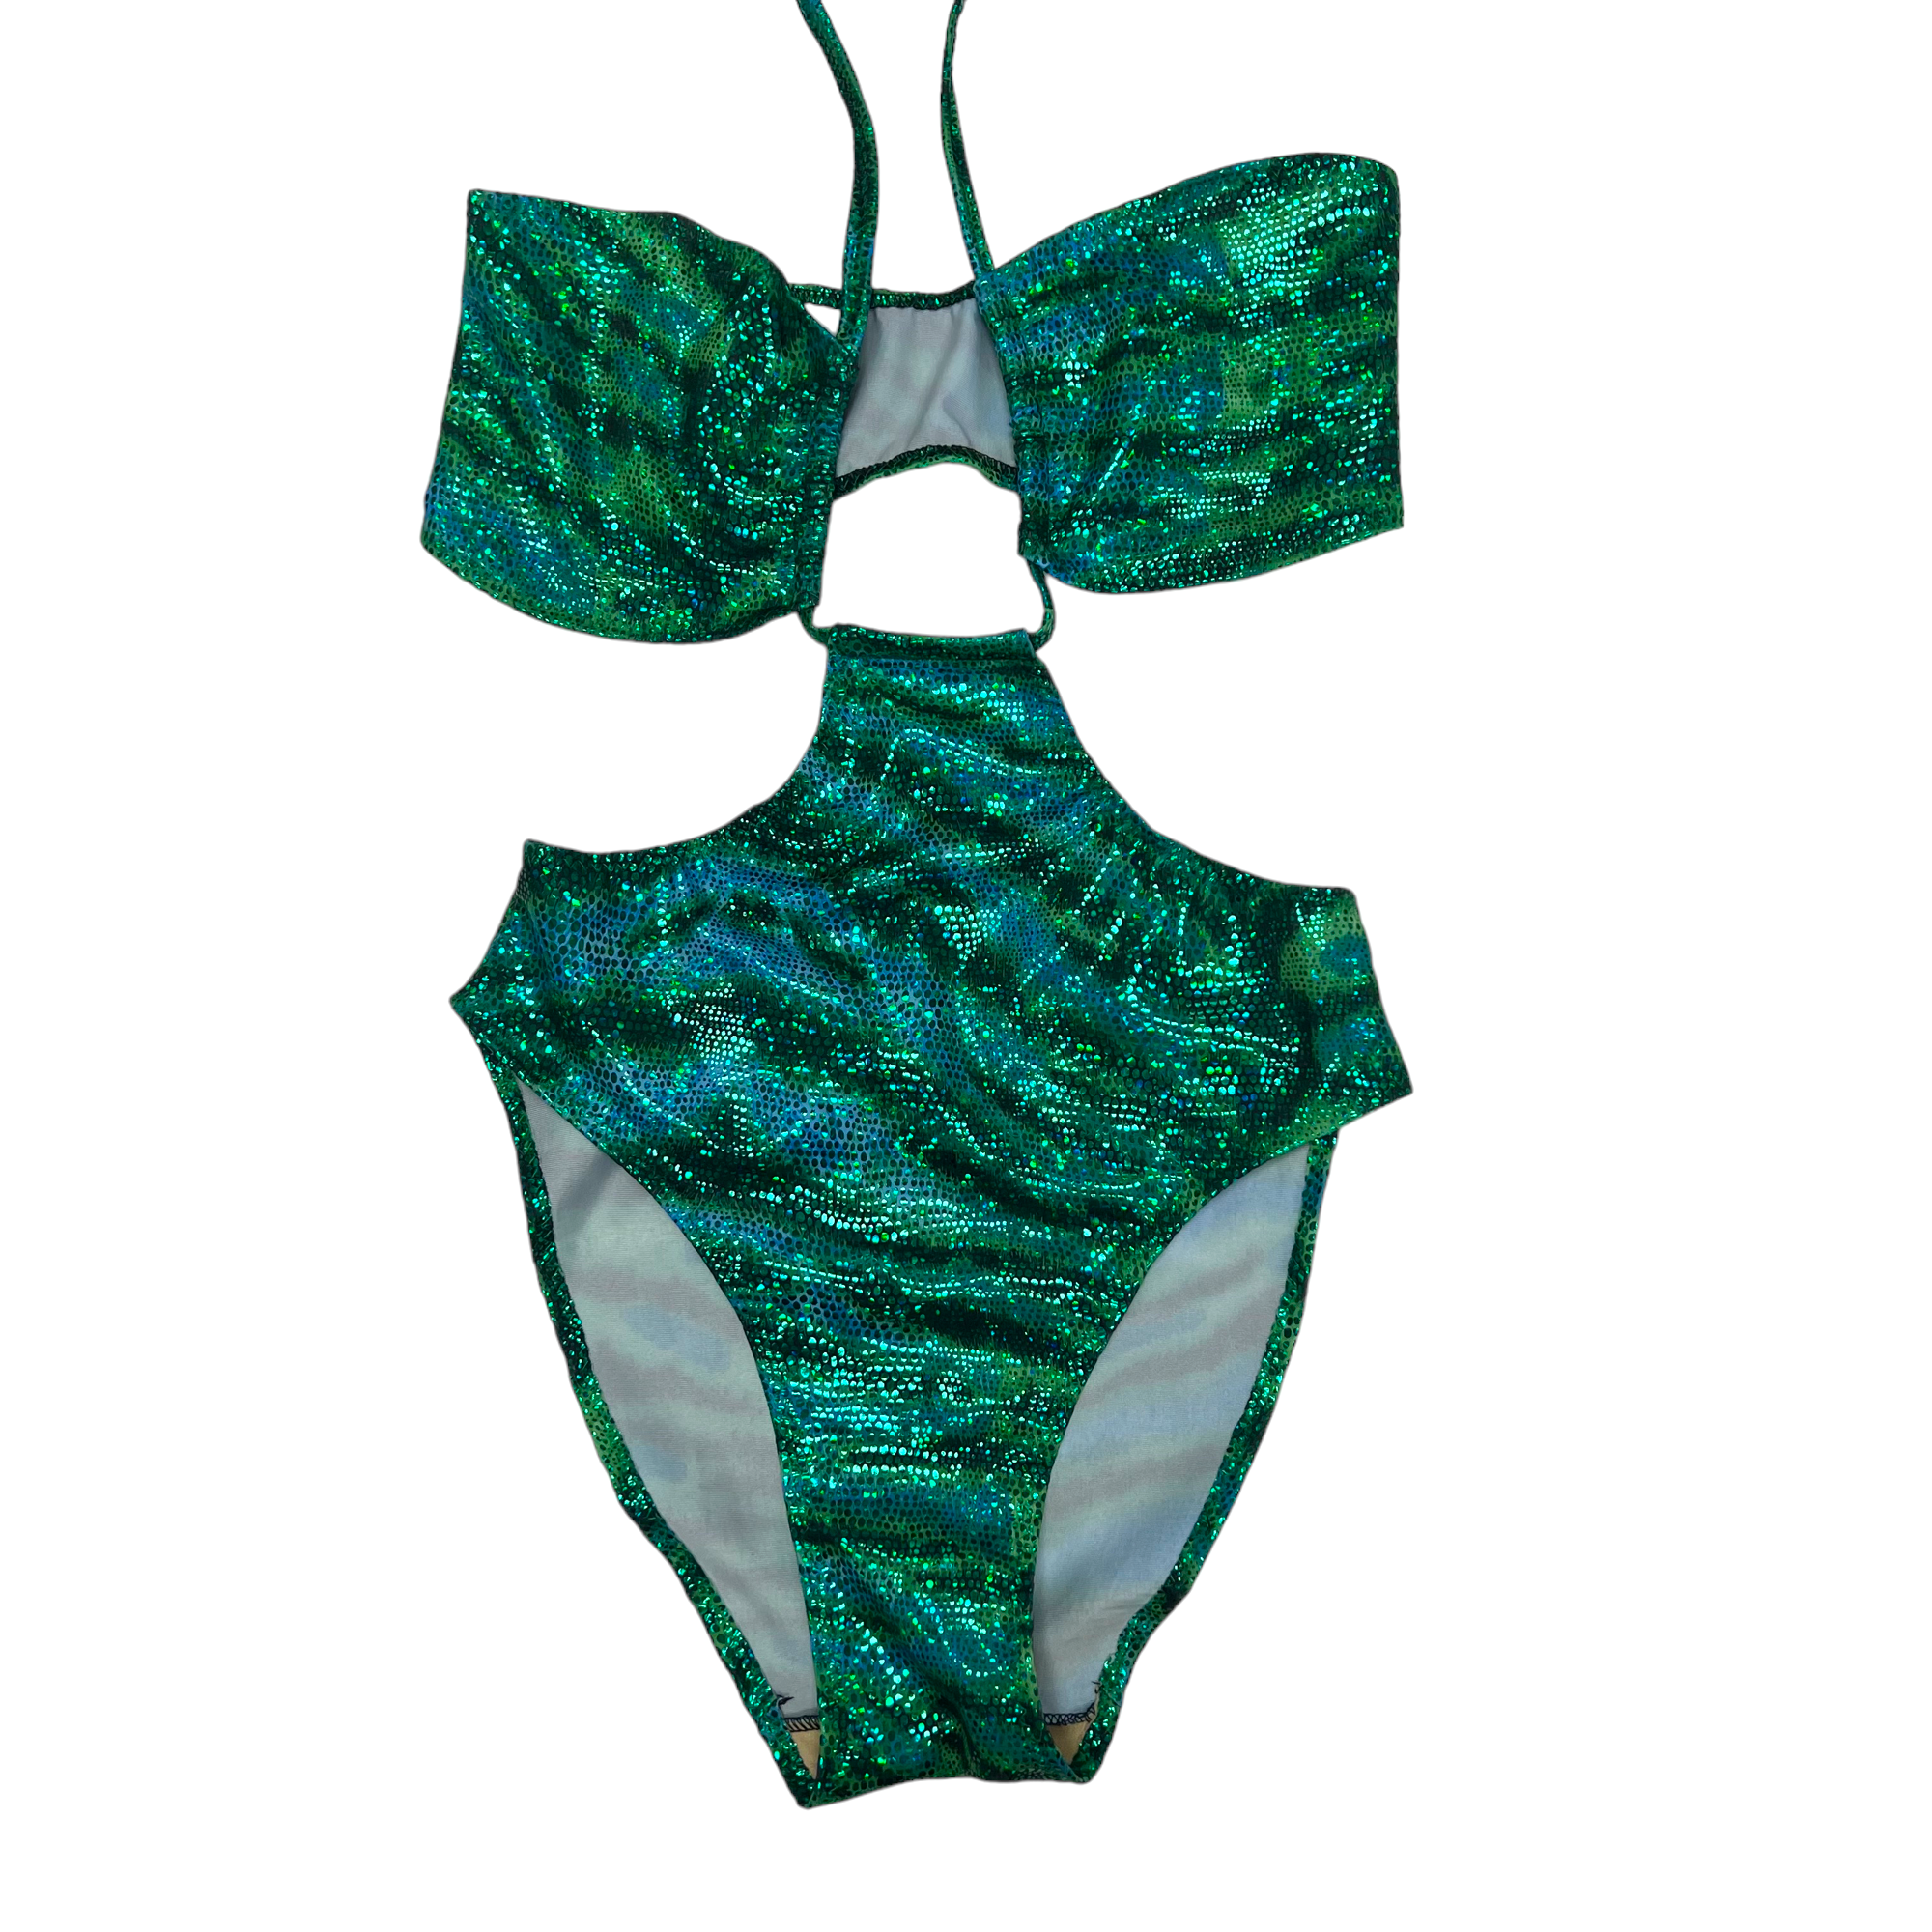 Emerald Tiger Bodysuit - OOAK XS/S/L